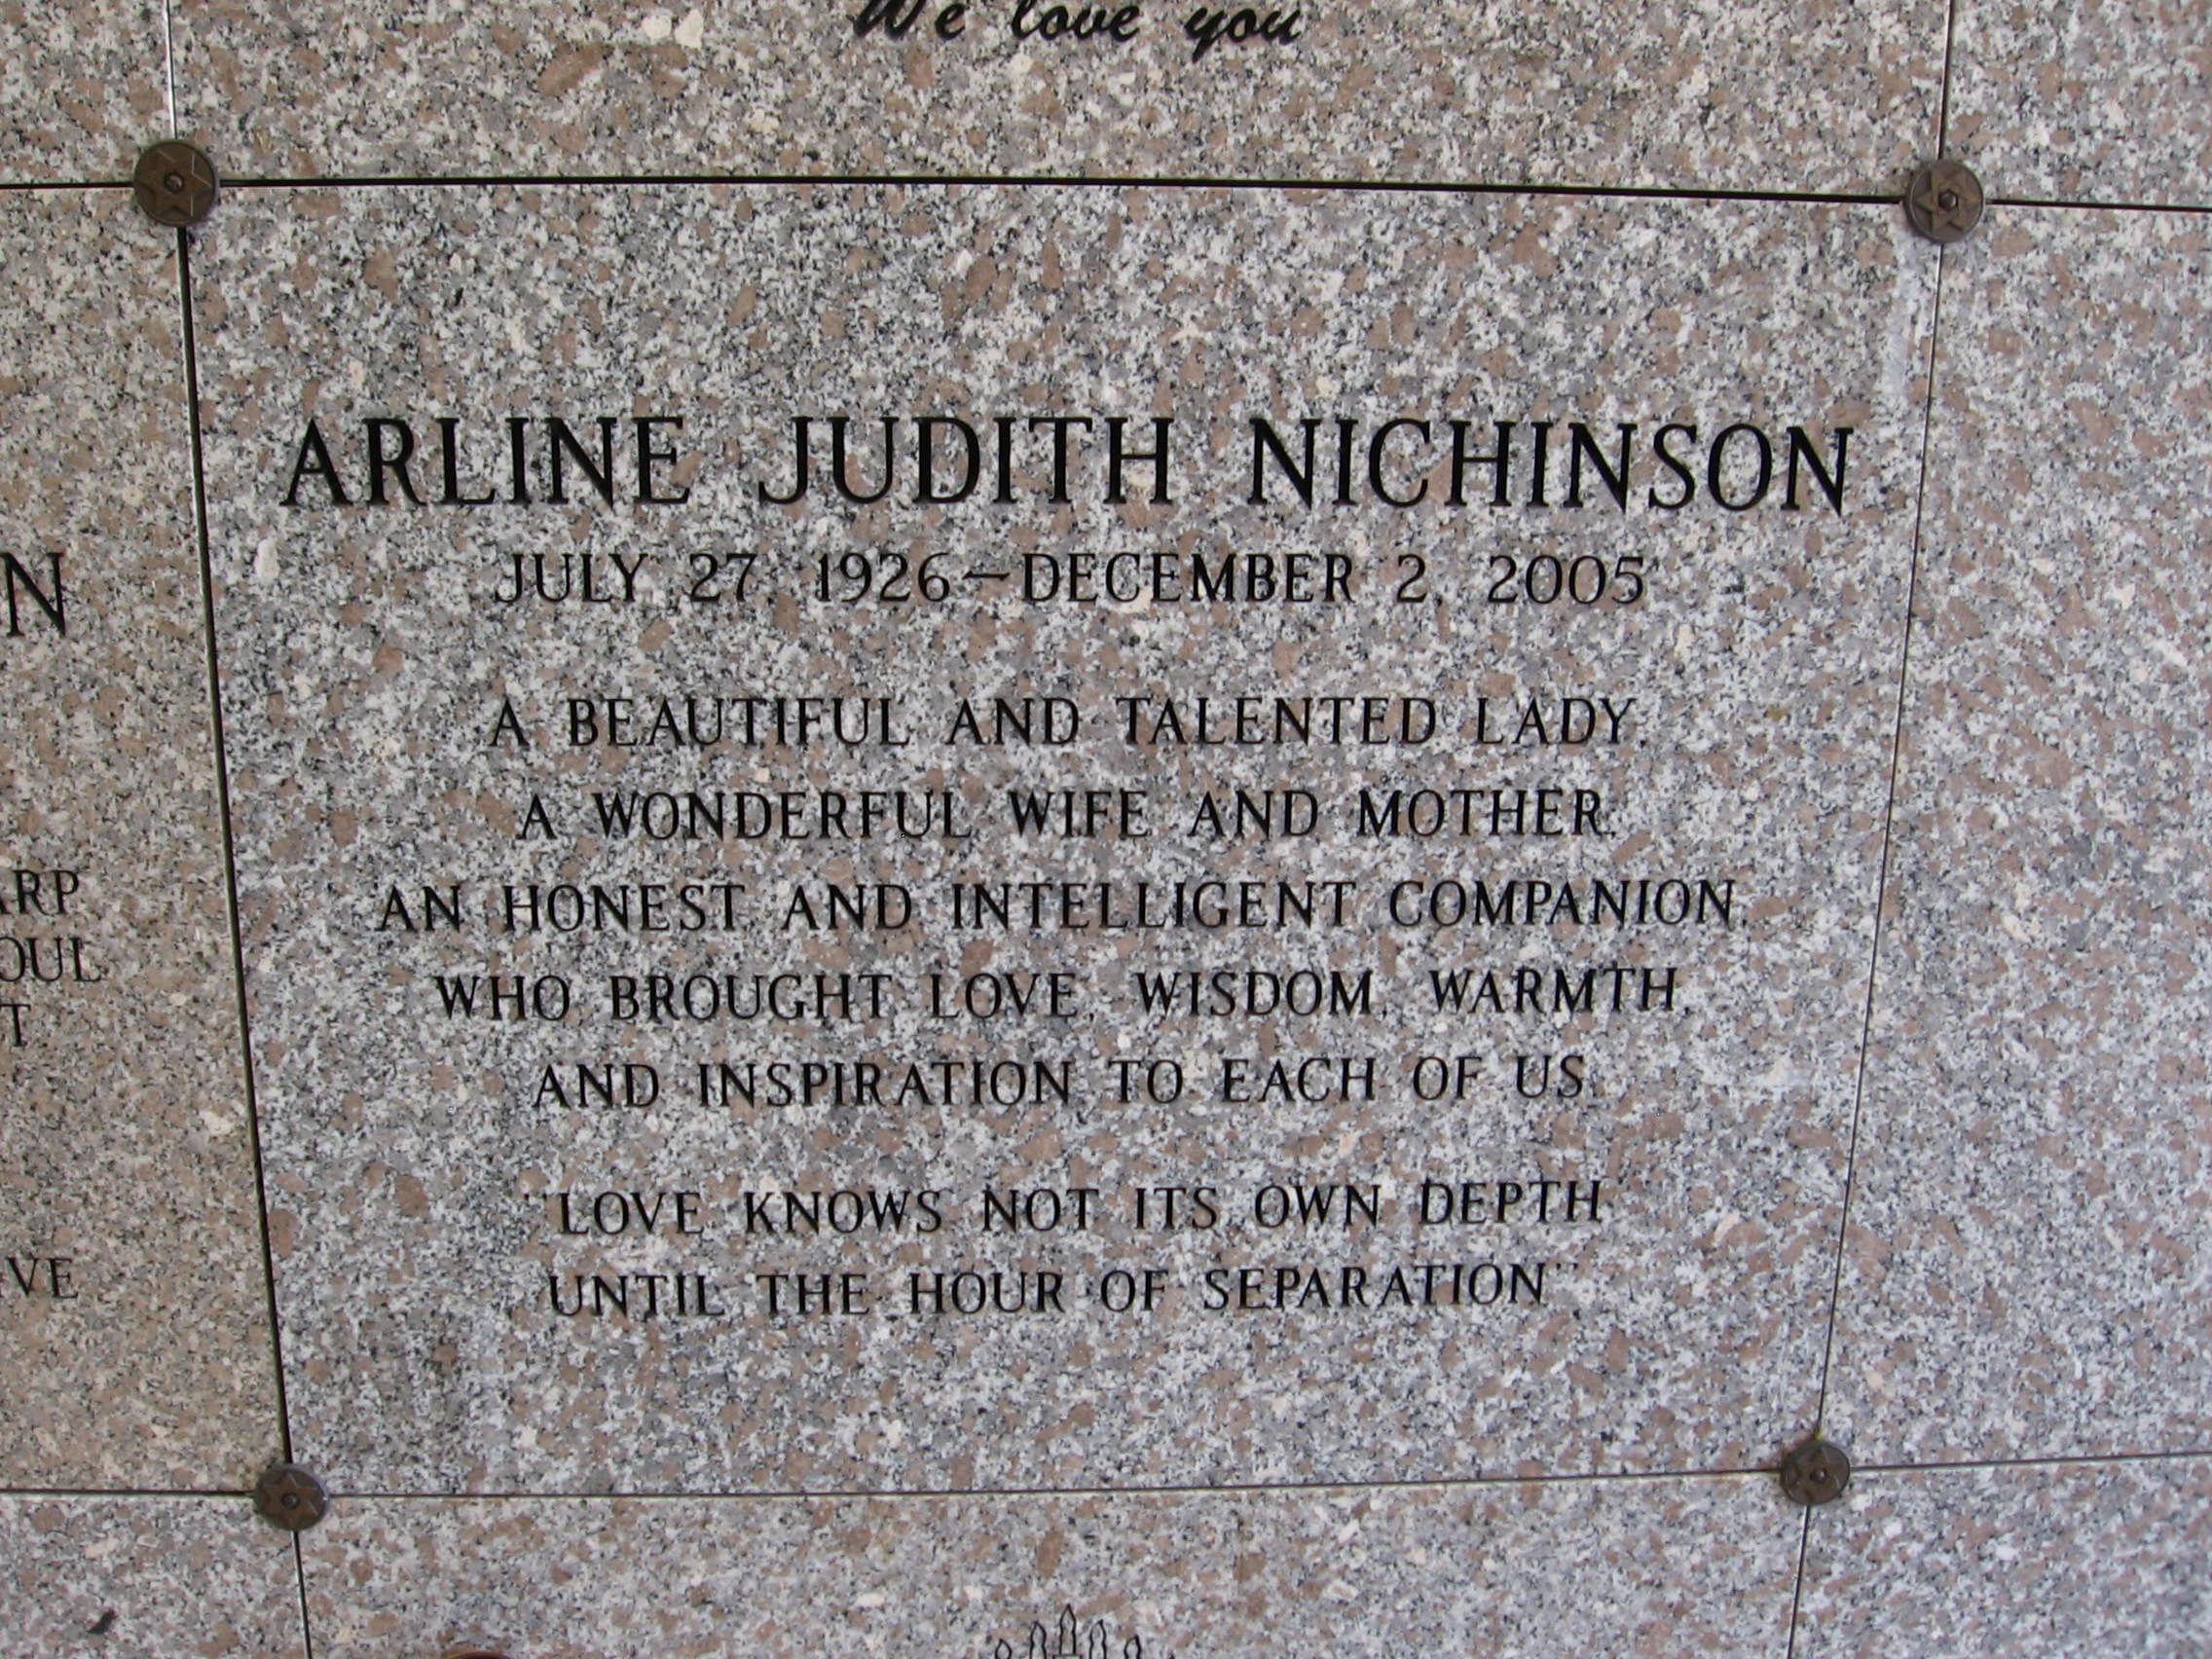 Arline Judith Nichinson